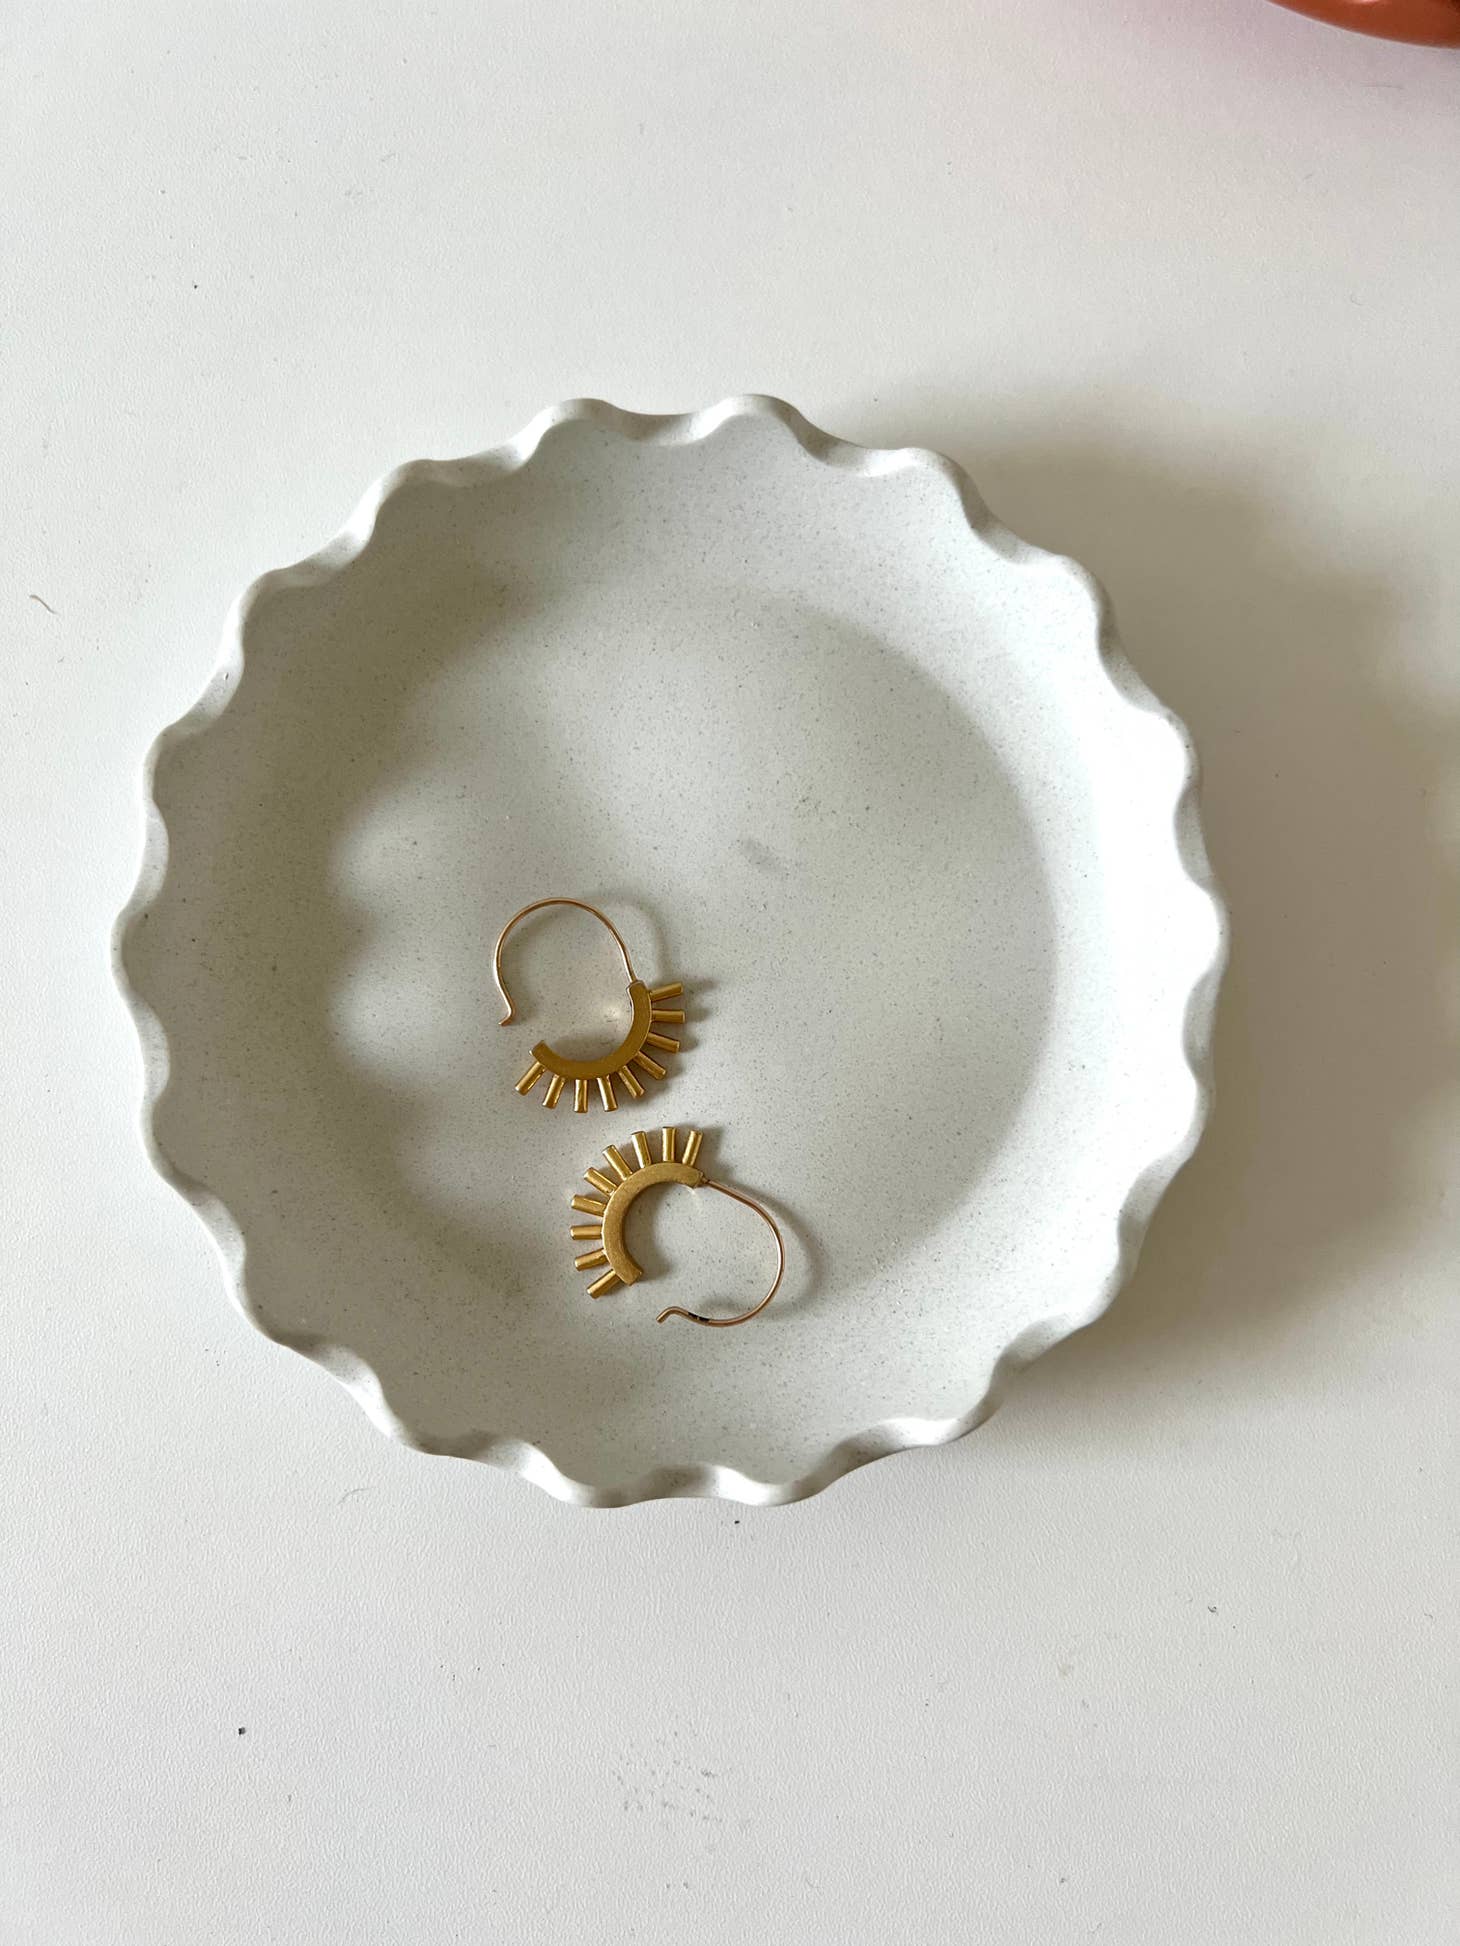 Scalloped Edge Vintage Modern Jewelry Tray White - FINAL SALE